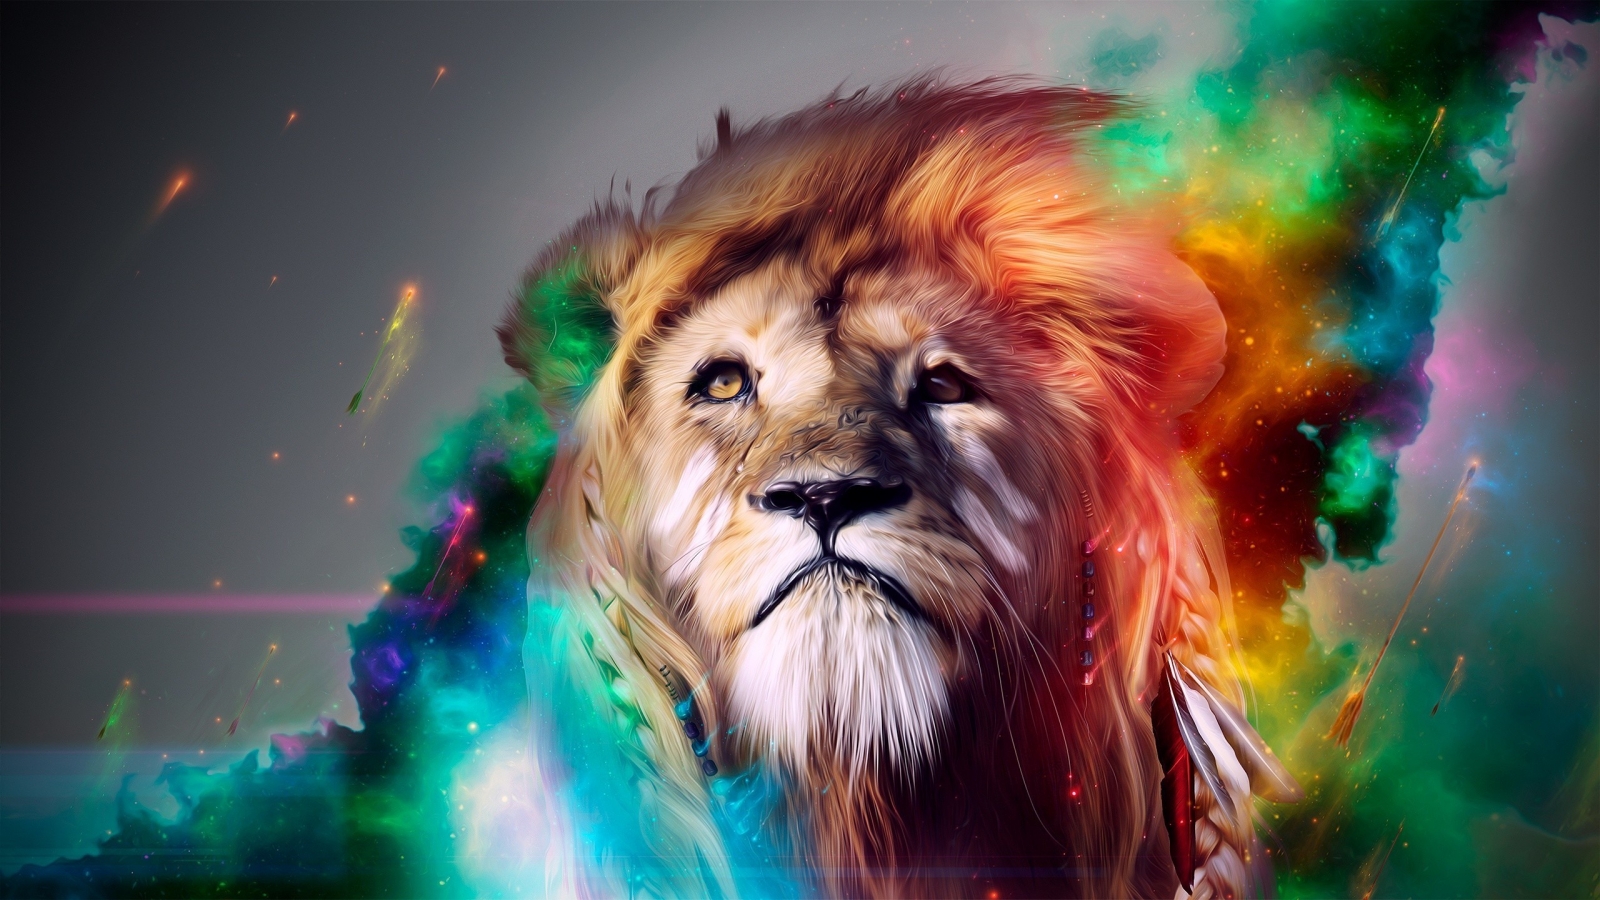 Rainbow Lion for 1600 x 900 HDTV resolution